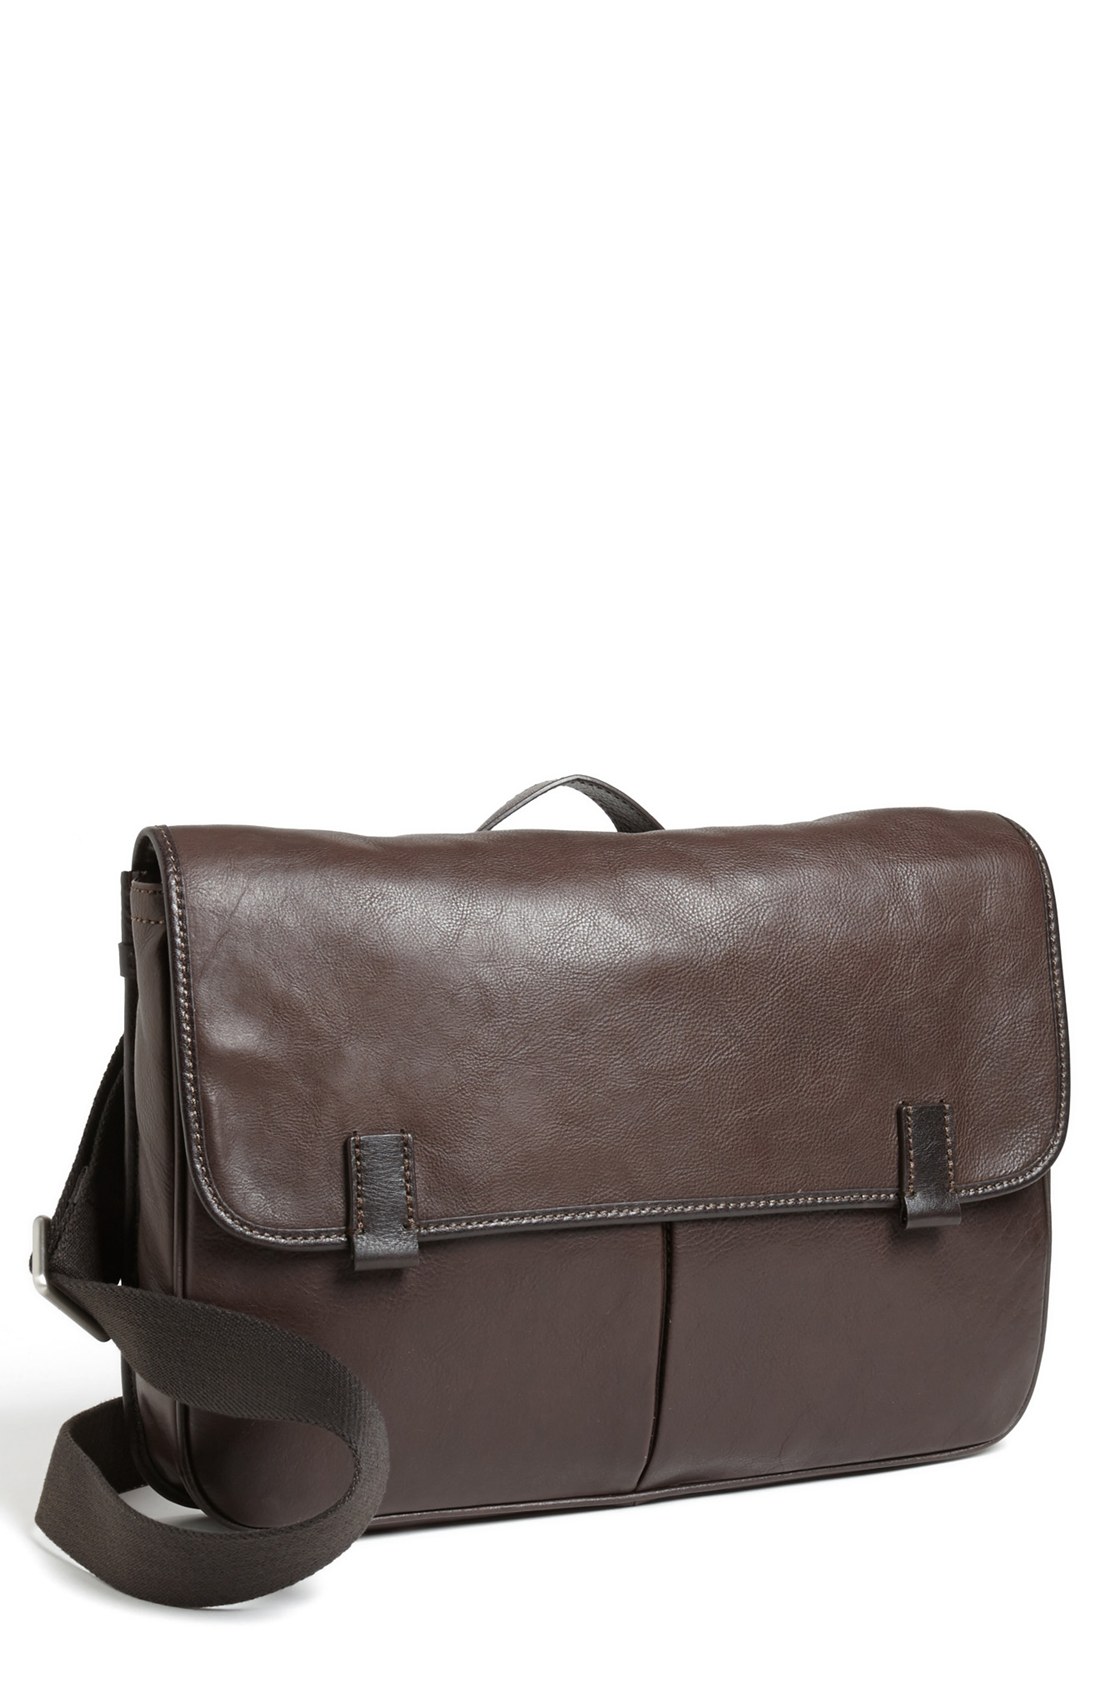 Fossil Mercer Ew Leather Messenger Bag in Brown for Men | Lyst